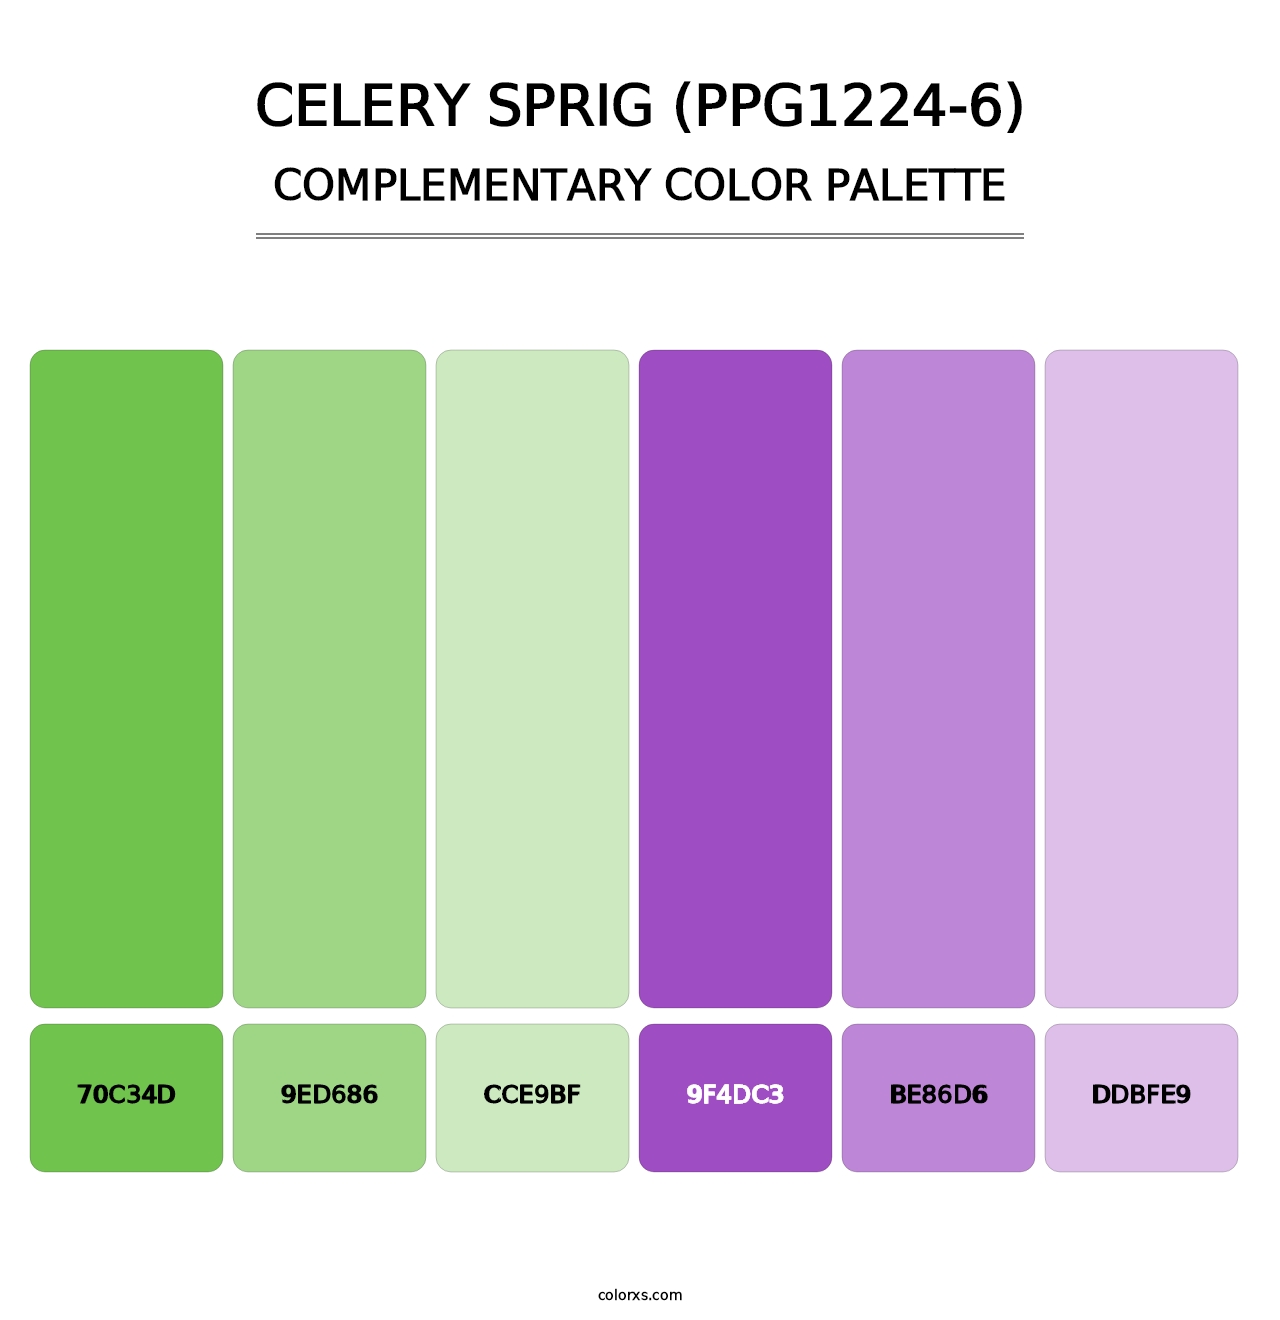 Celery Sprig (PPG1224-6) - Complementary Color Palette